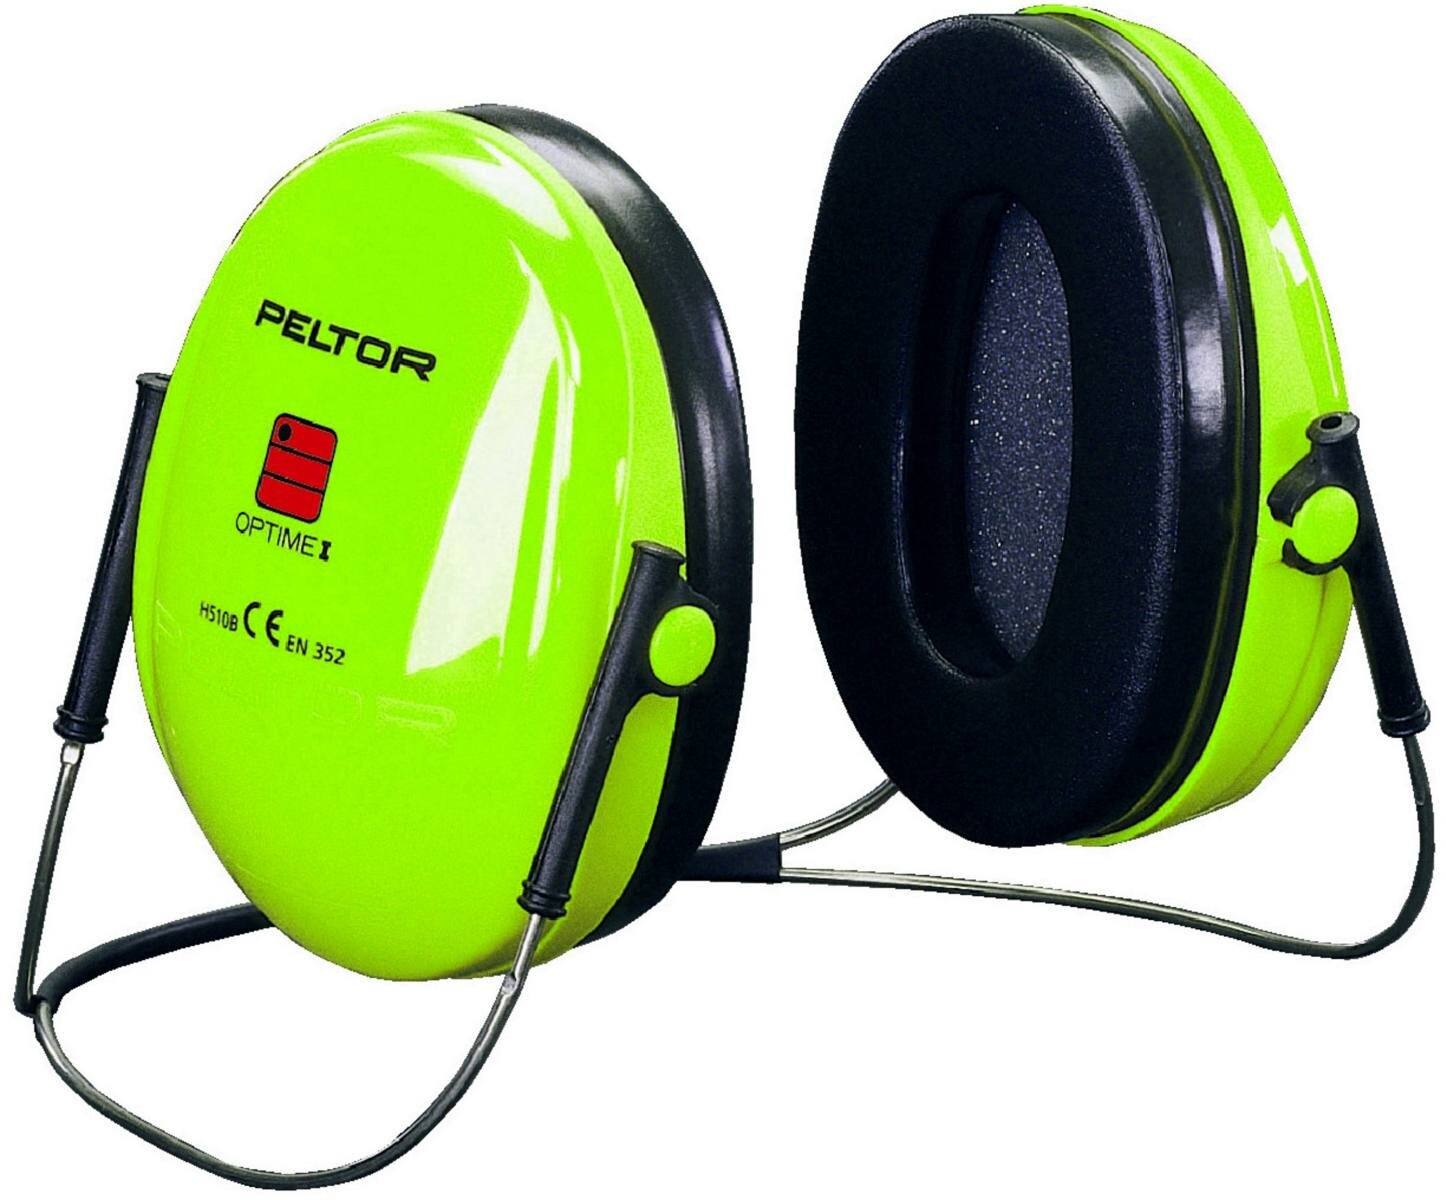  3M PELTOR Optime I kuulosuojaimet, kaulapanta, Hi-Viz, lisääntynyt näkyvyys, SNR=26 dB, H510BV